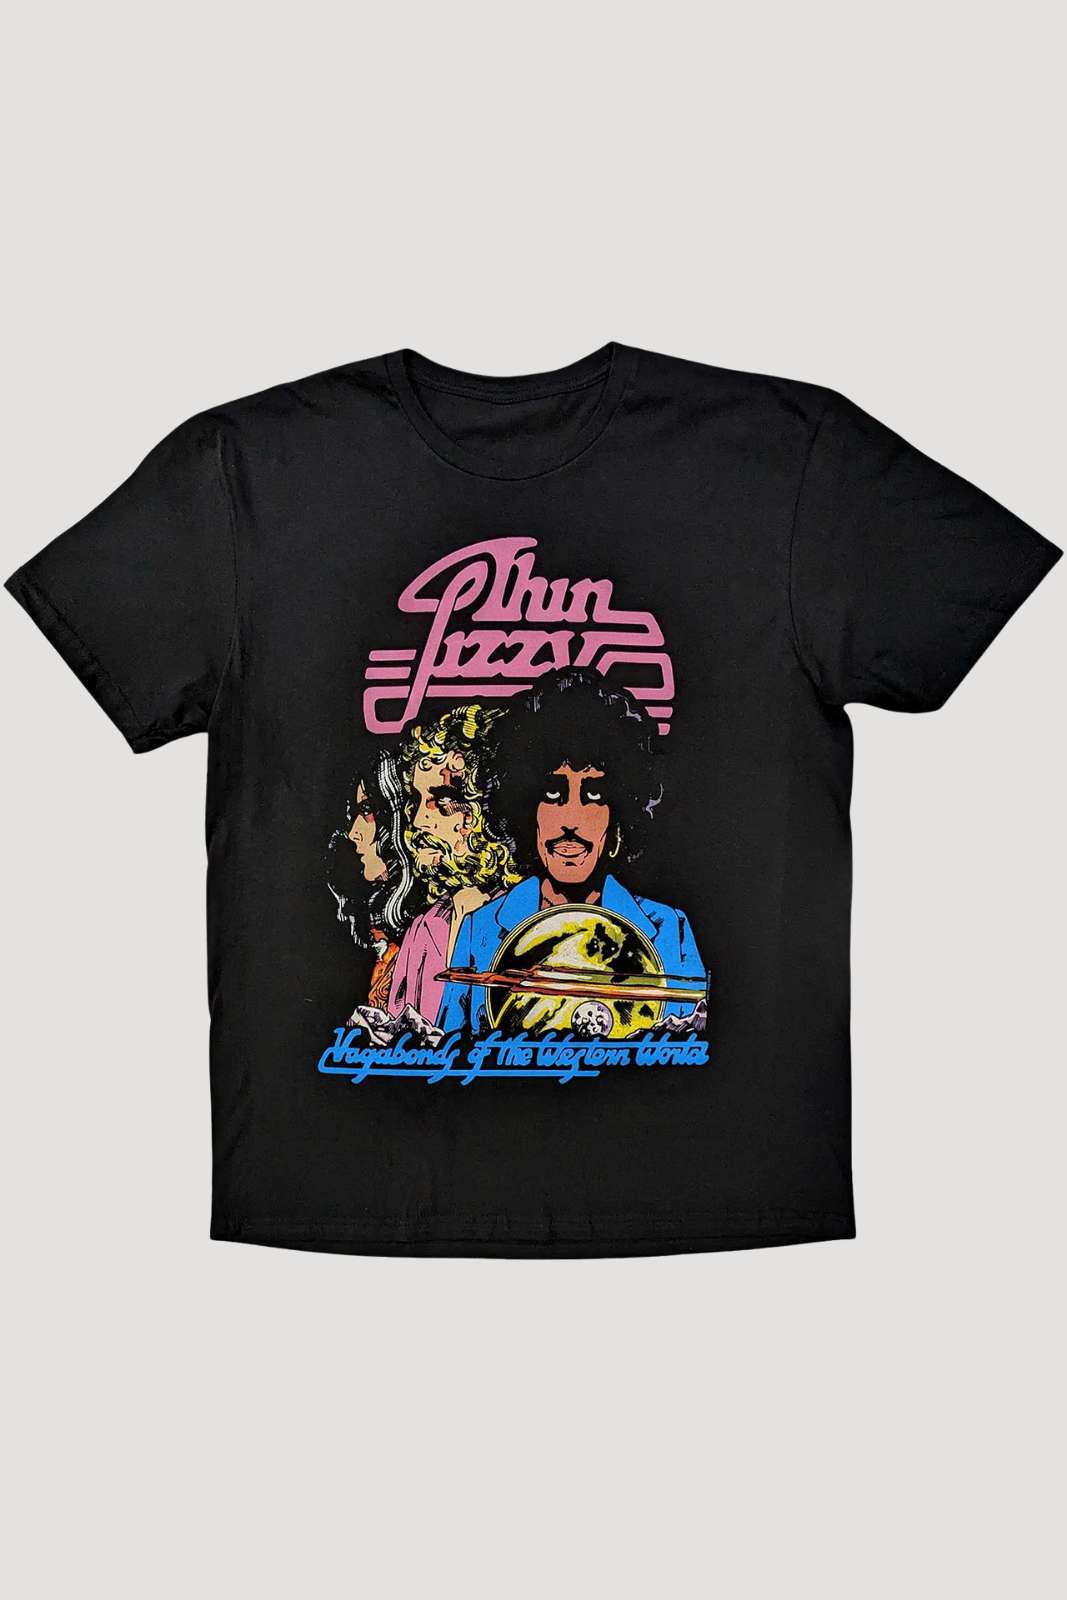 Thin Lizzy Vagabond of the Western World Shirt